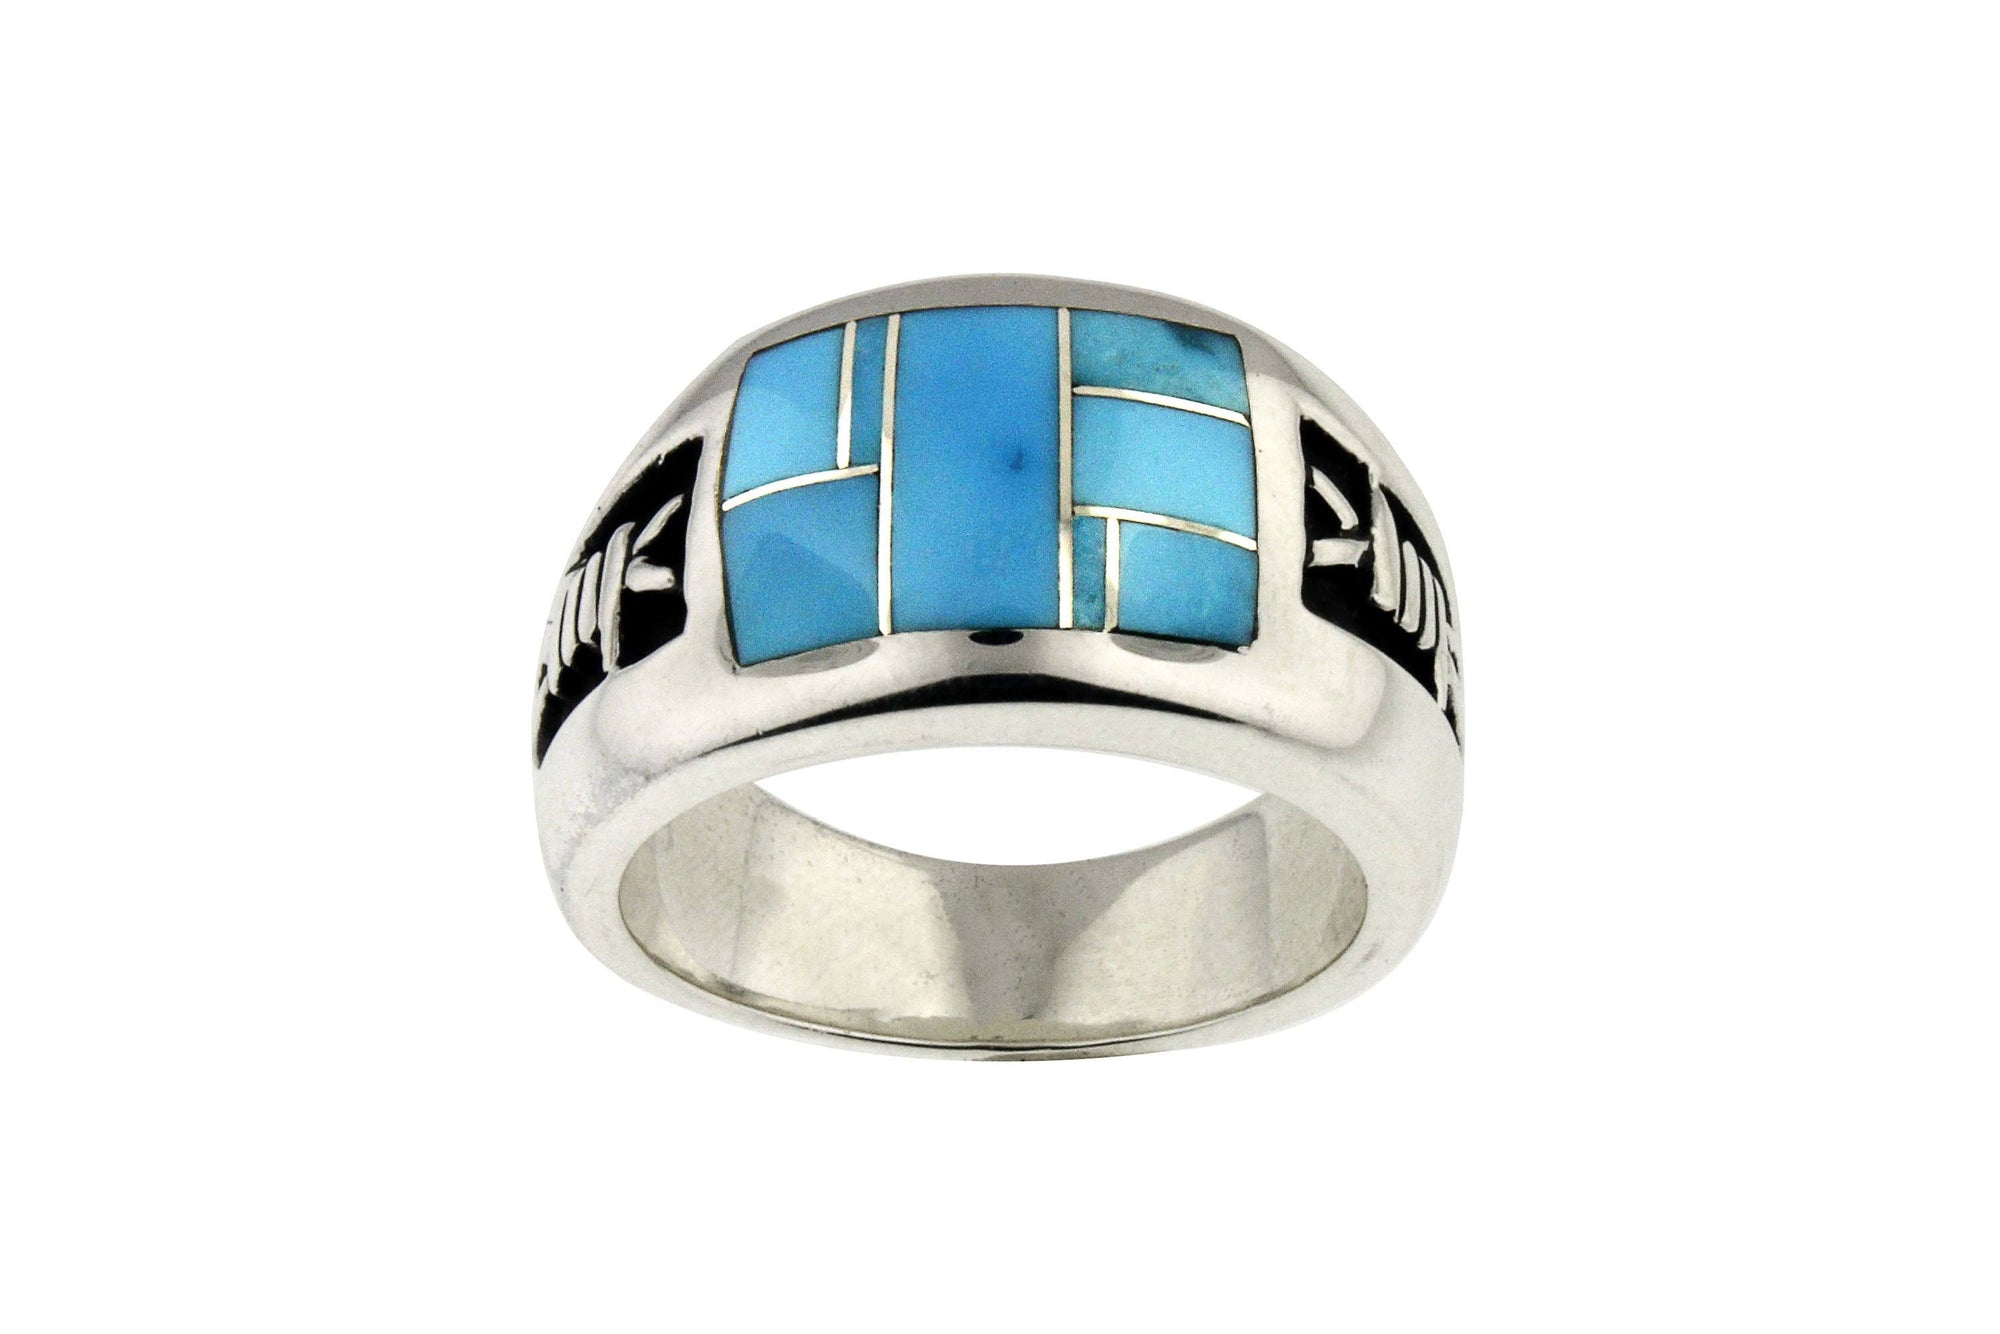 David Rosales Barbwire Men's Turquoise Ring